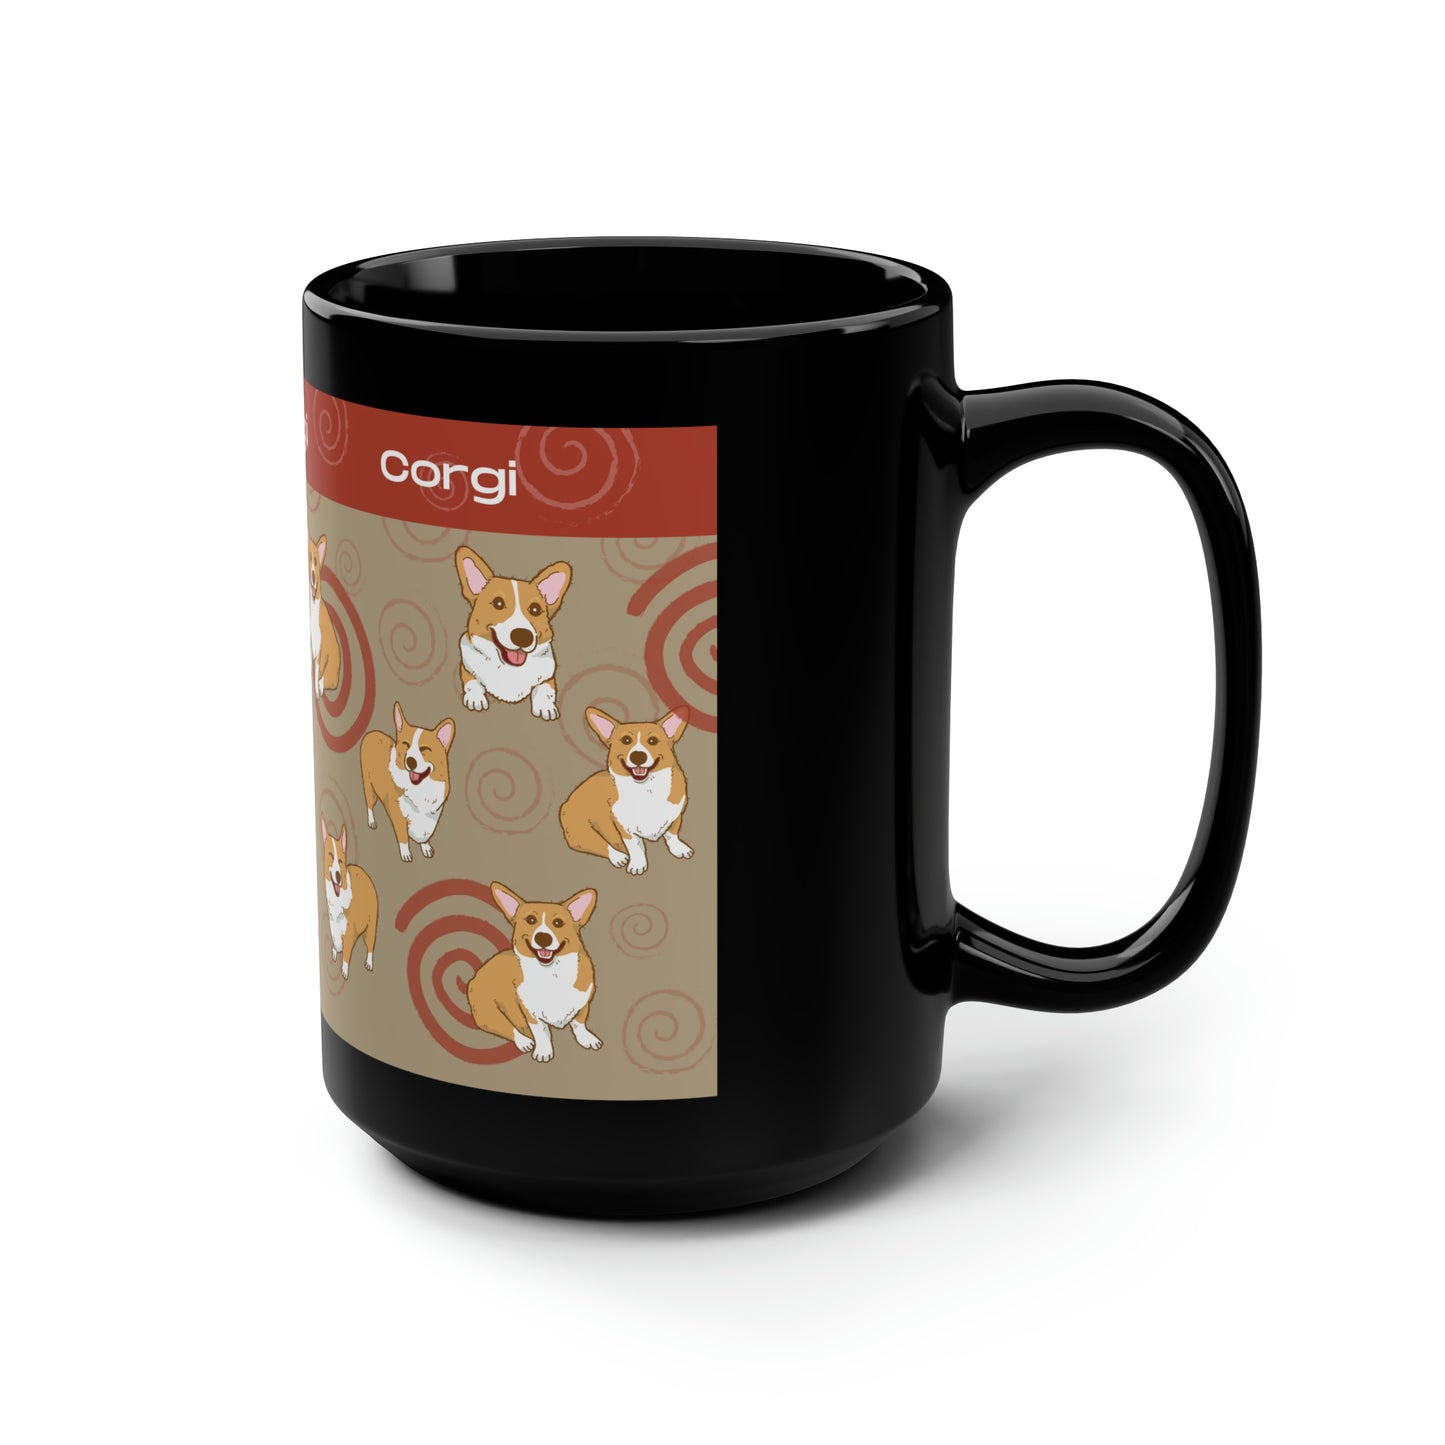 Corgi Mug